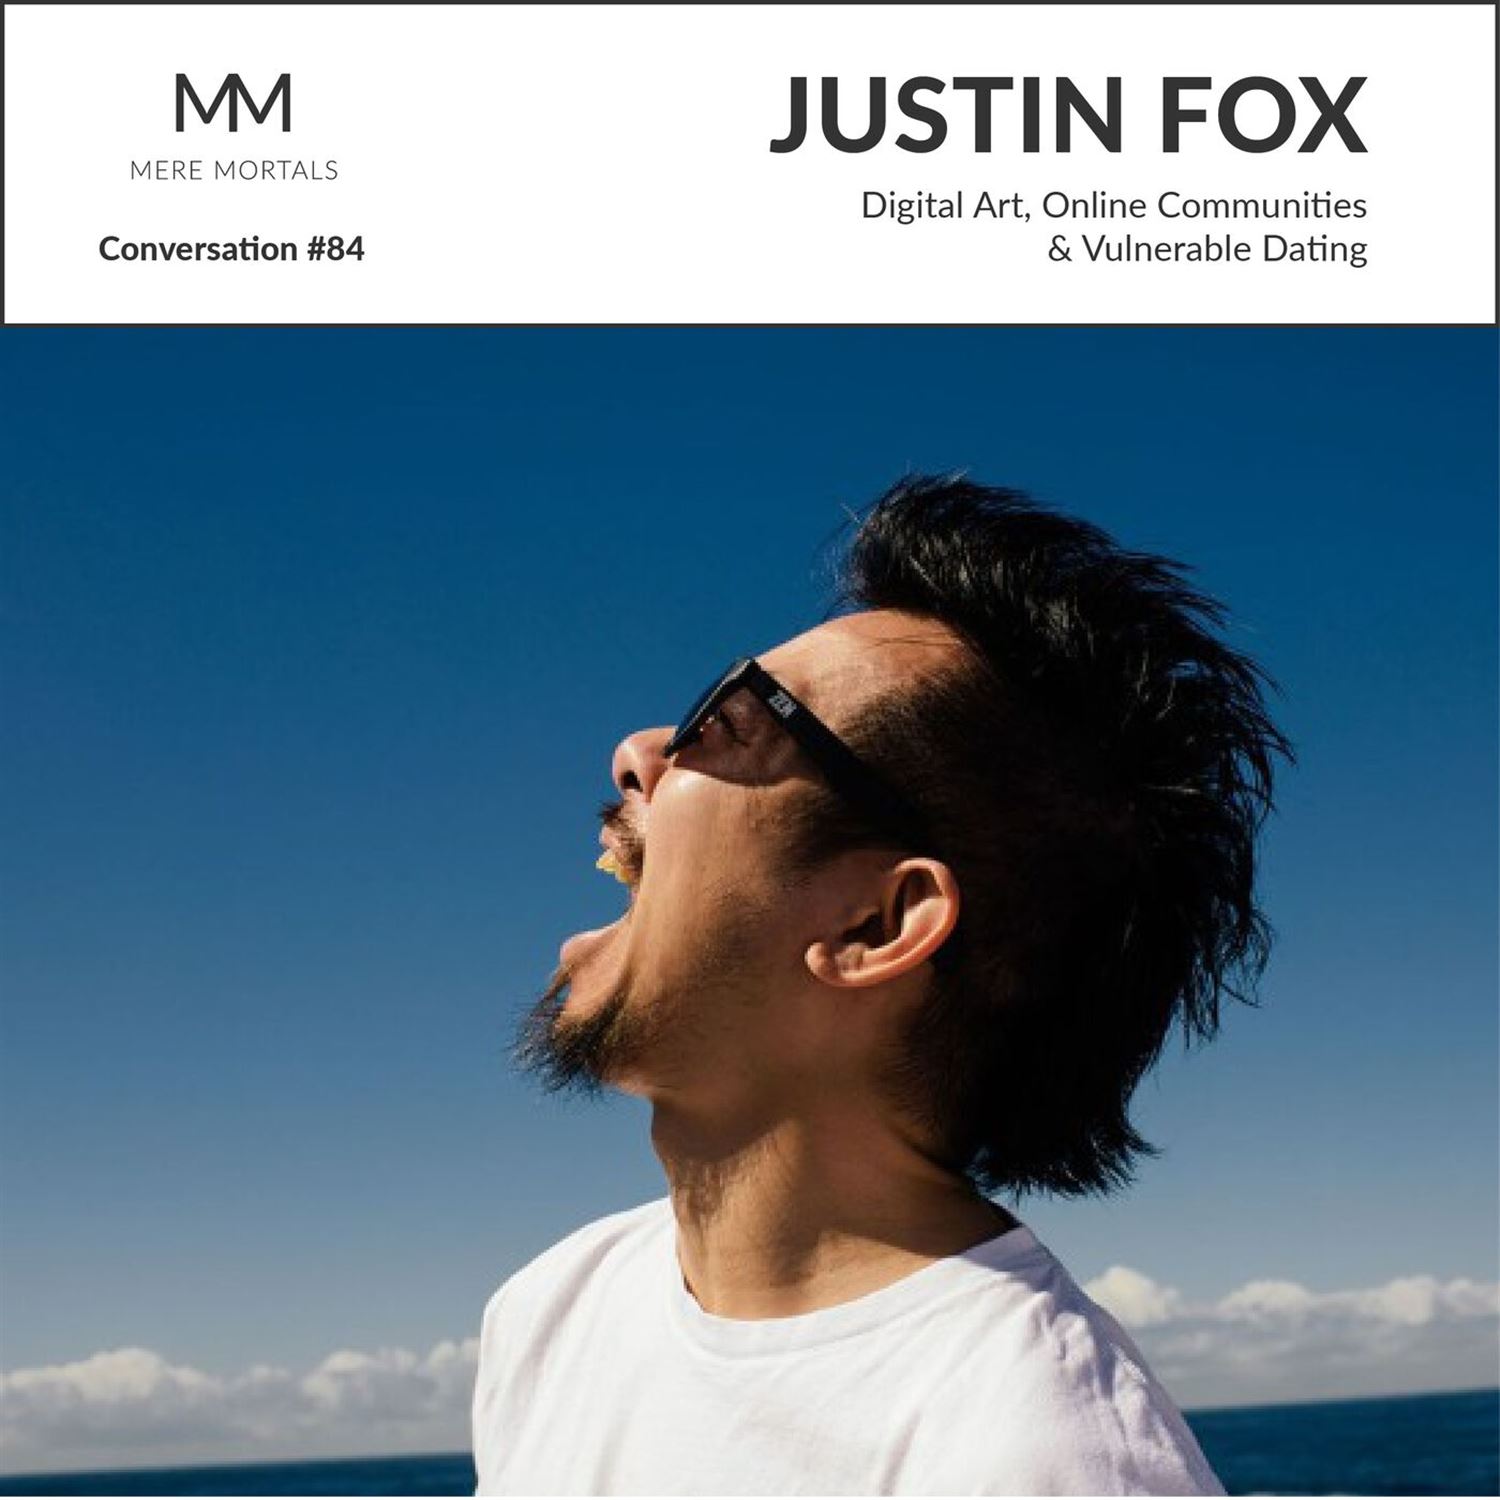 JUSTIN FOX | Digital Art, Online Communities & Vulnerable Dating